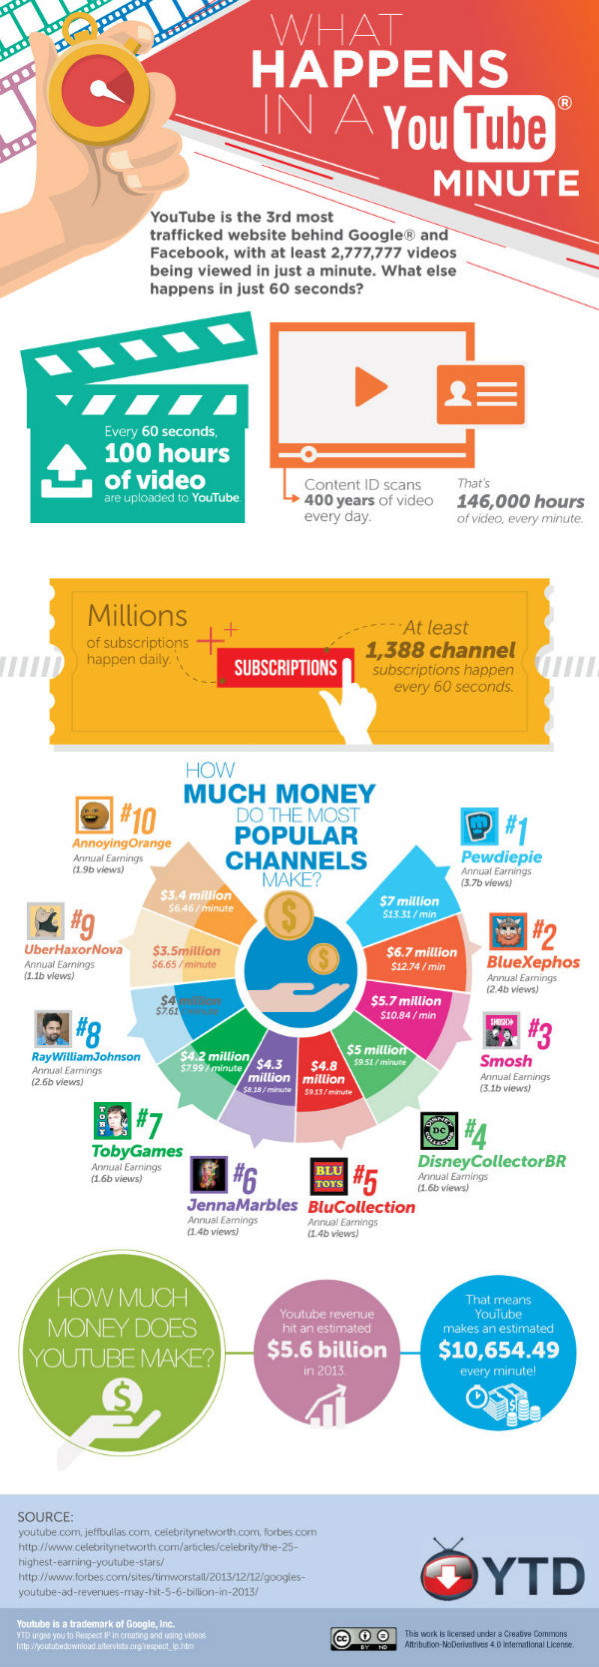 monetization of youtube popular channels